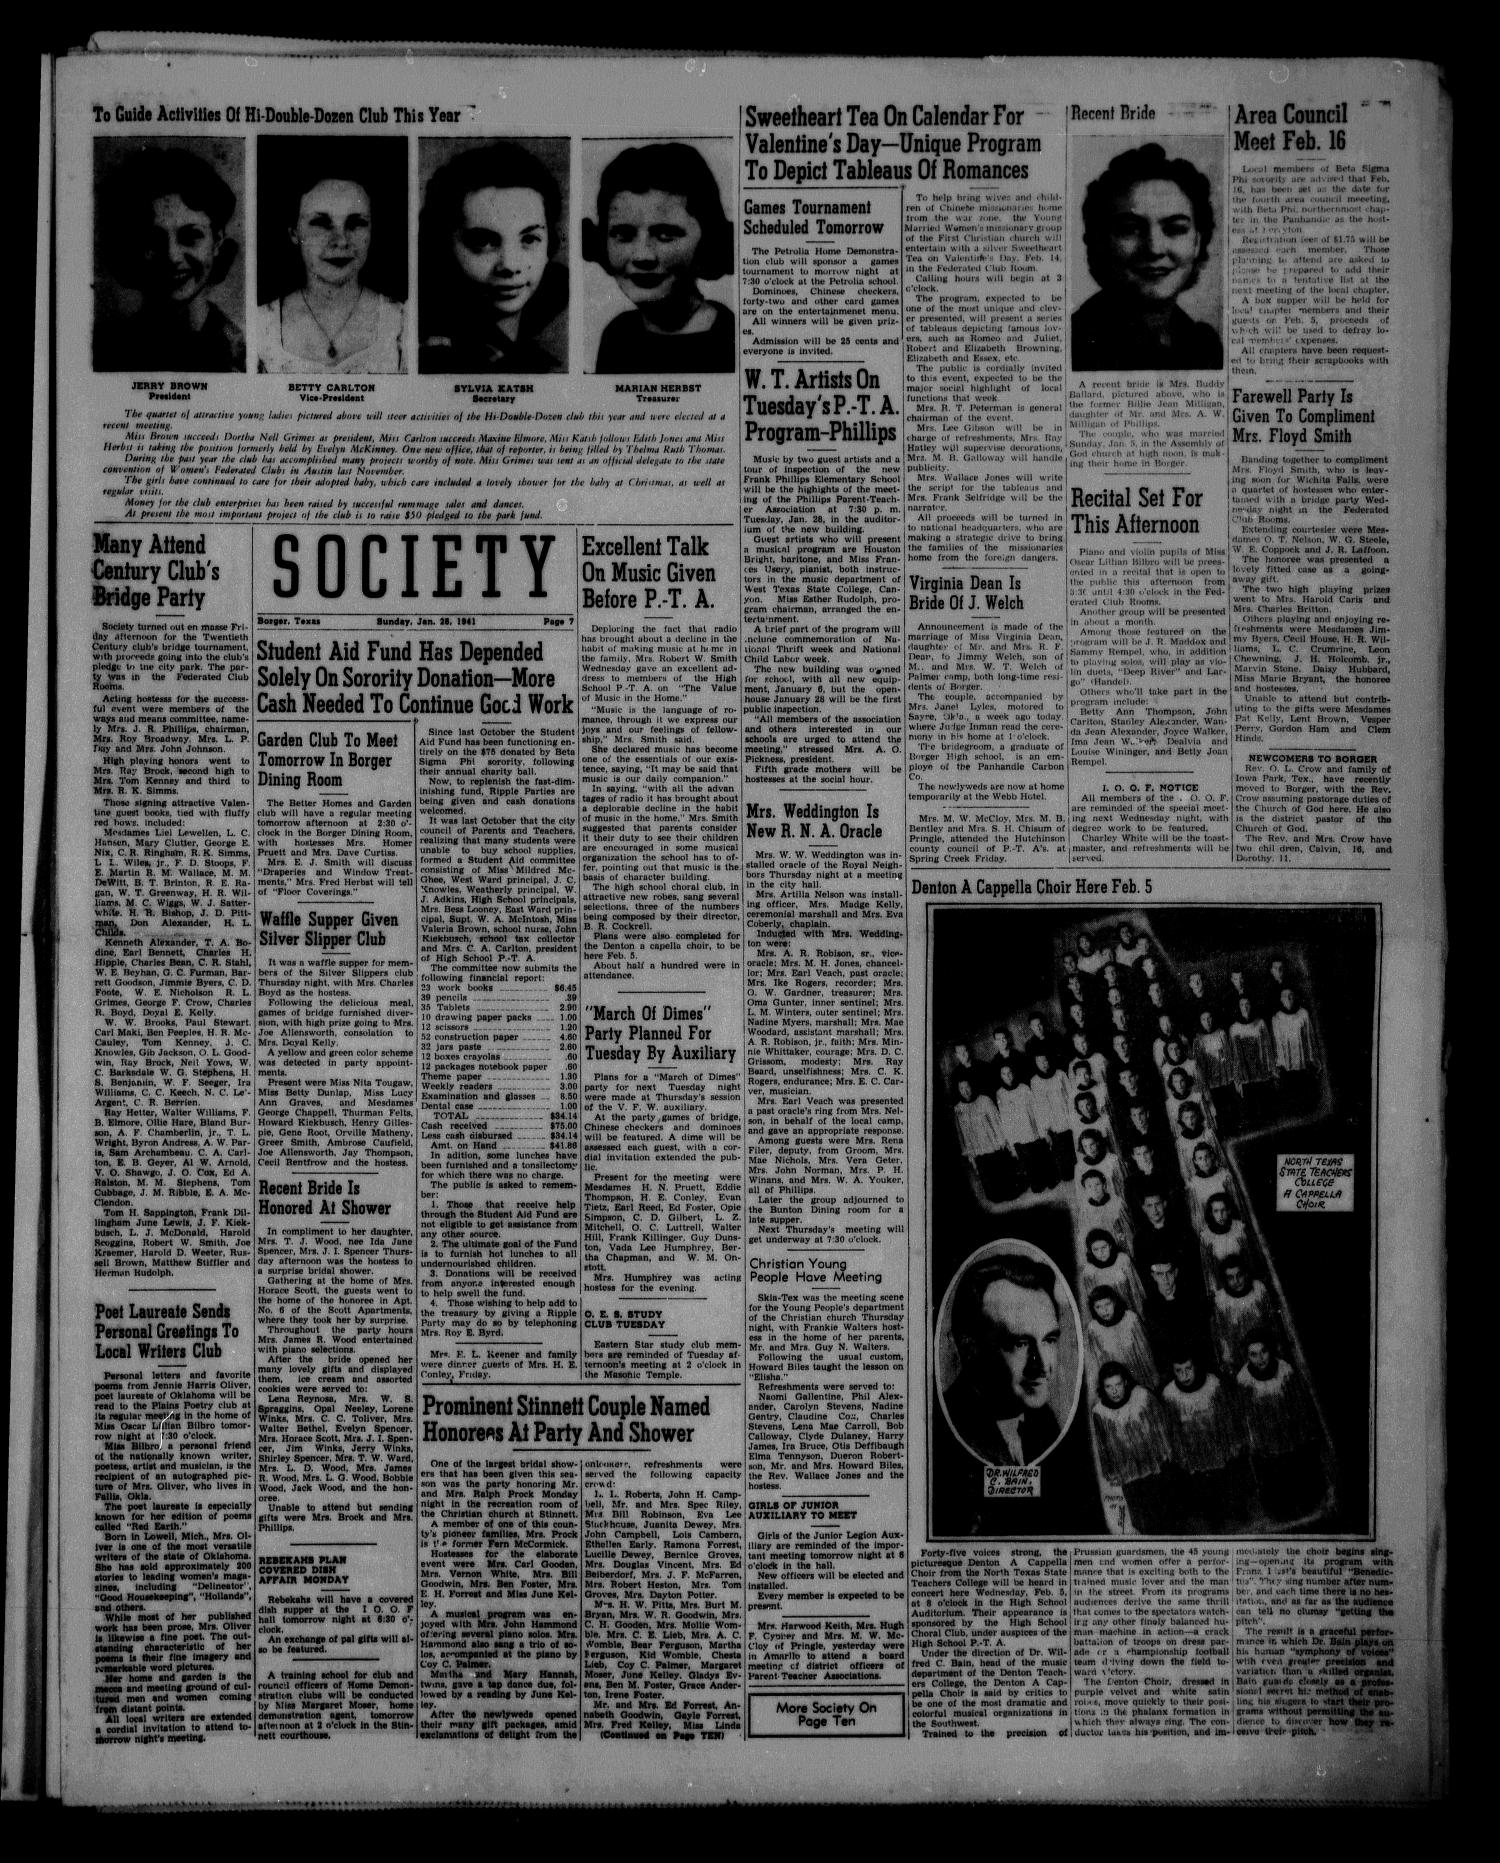 Borger Daily Herald (Borger, Tex.), Vol. 15, No. 55, Ed. 1 Sunday, January  26, 1941 - Page 7 of 10 - The Portal to Texas History